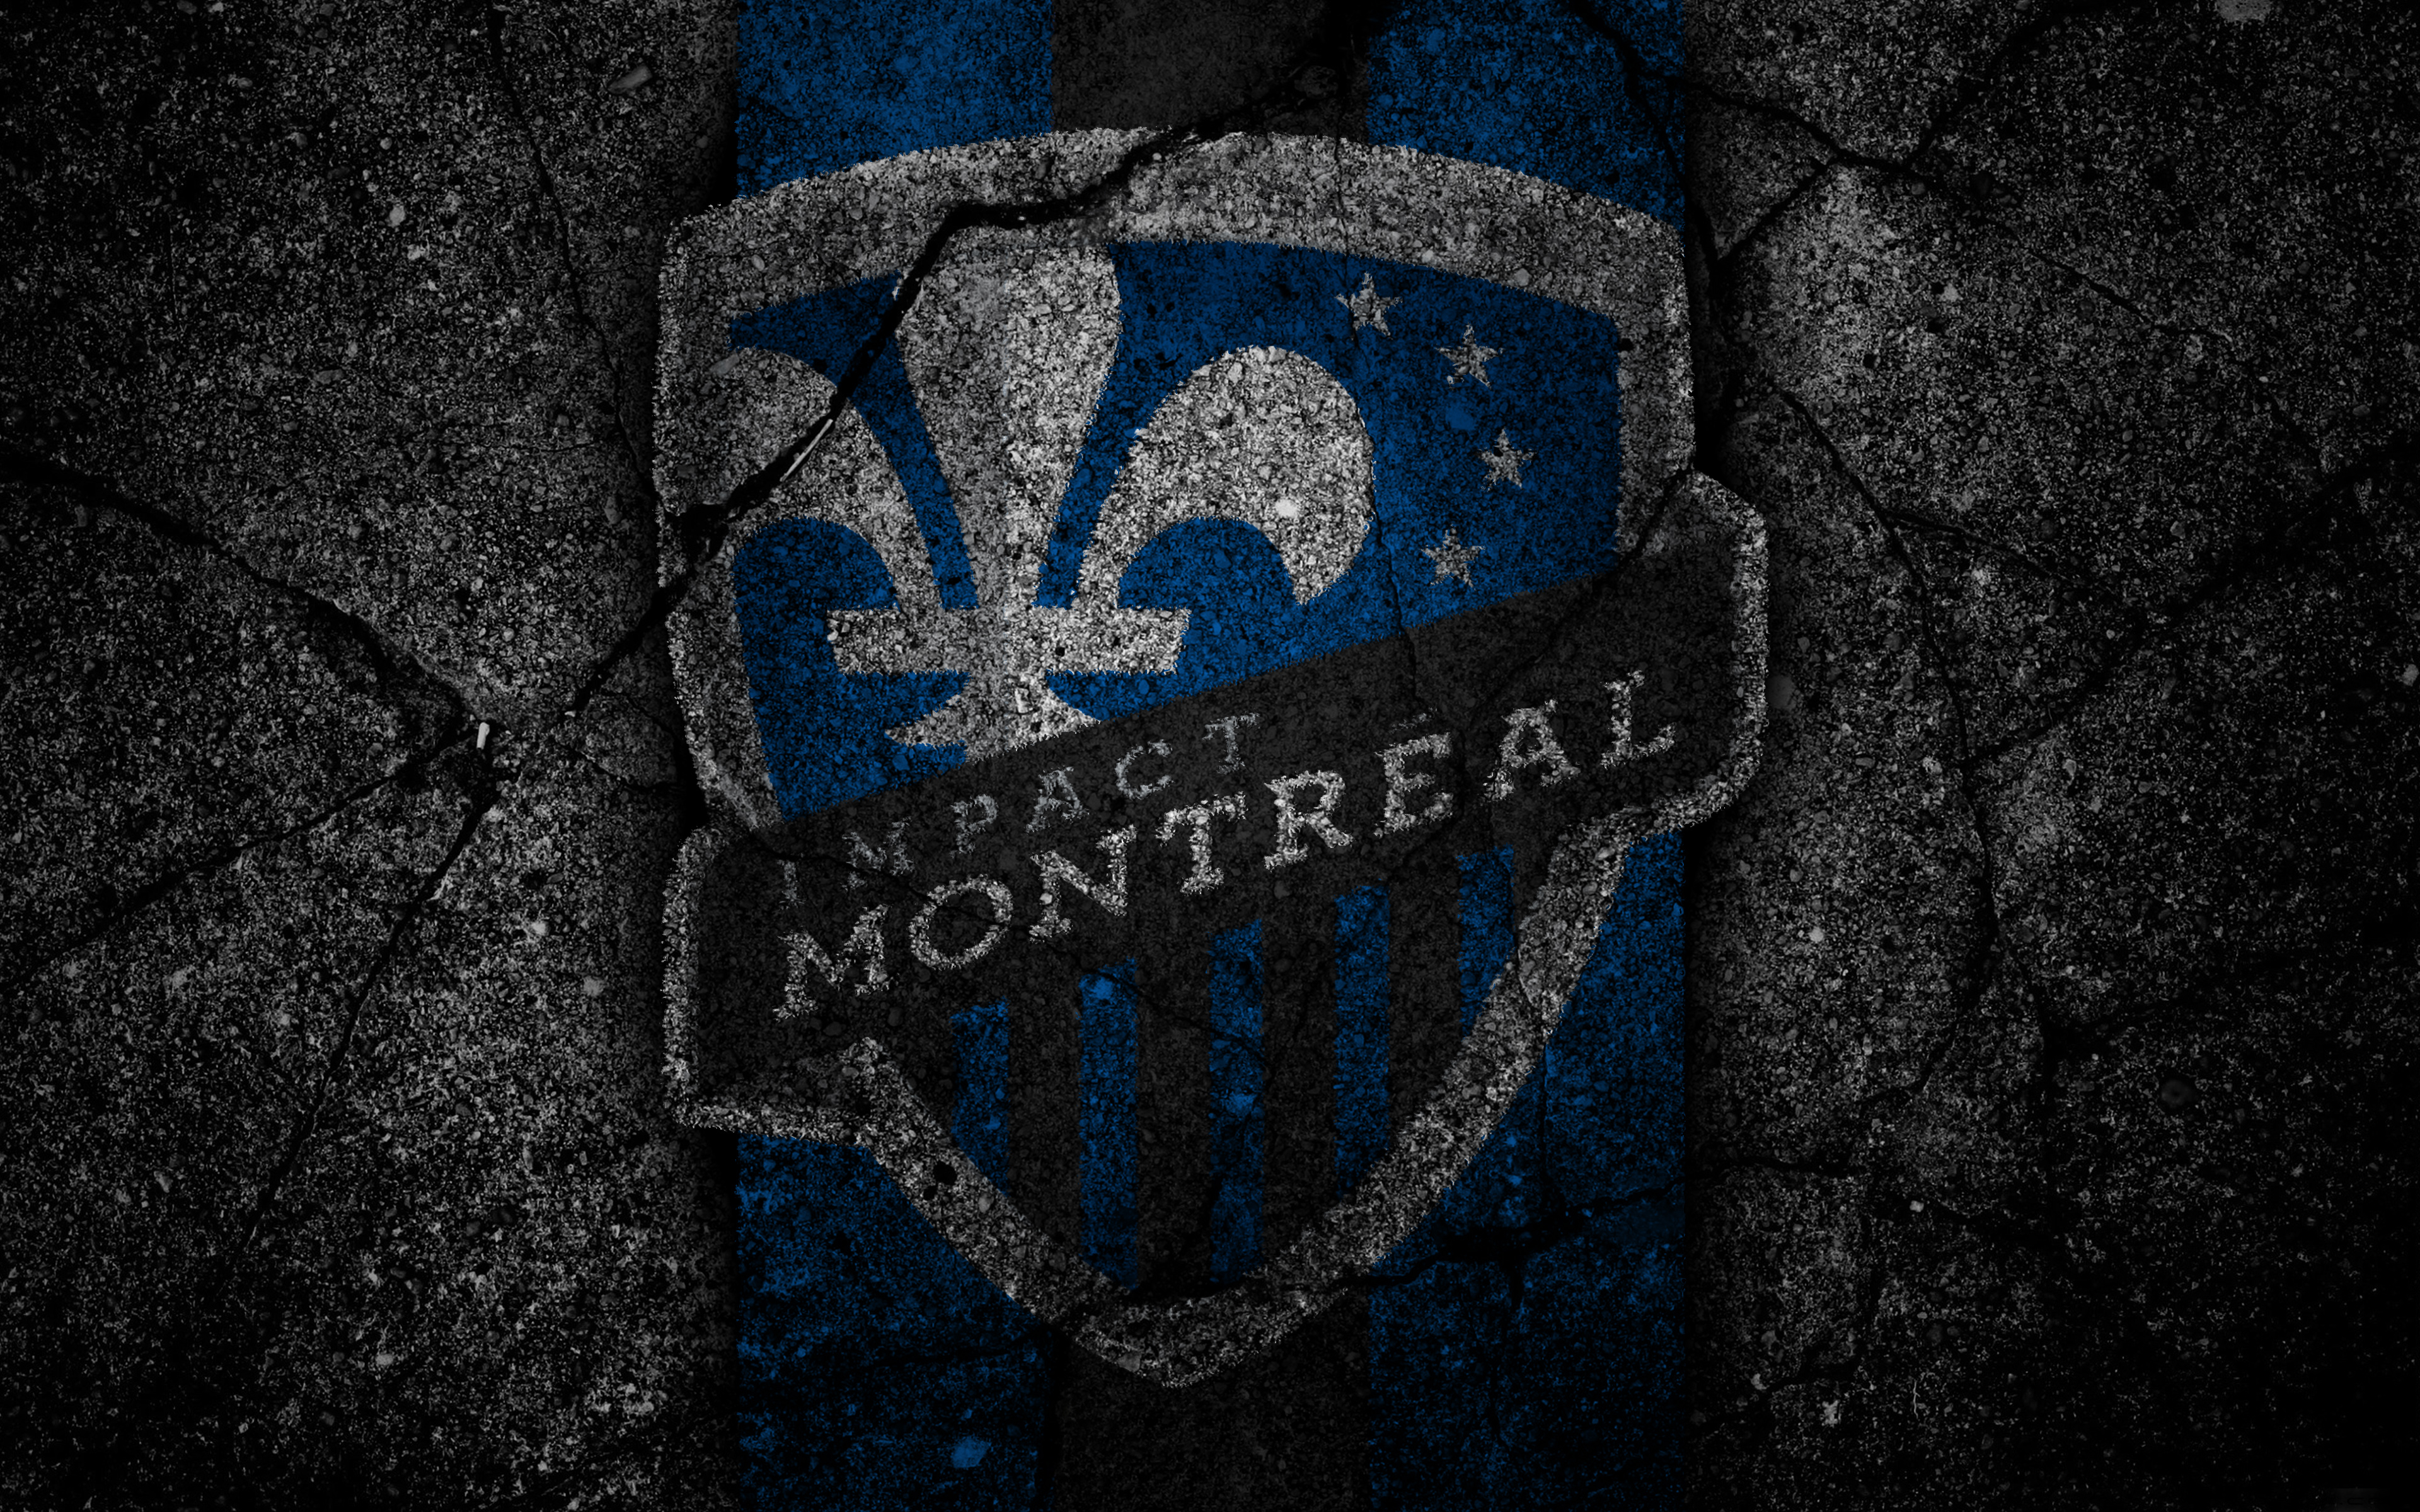 Descarga gratuita de fondo de pantalla para móvil de Fútbol, Logo, Emblema, Deporte, Mls, Cf Montreal.